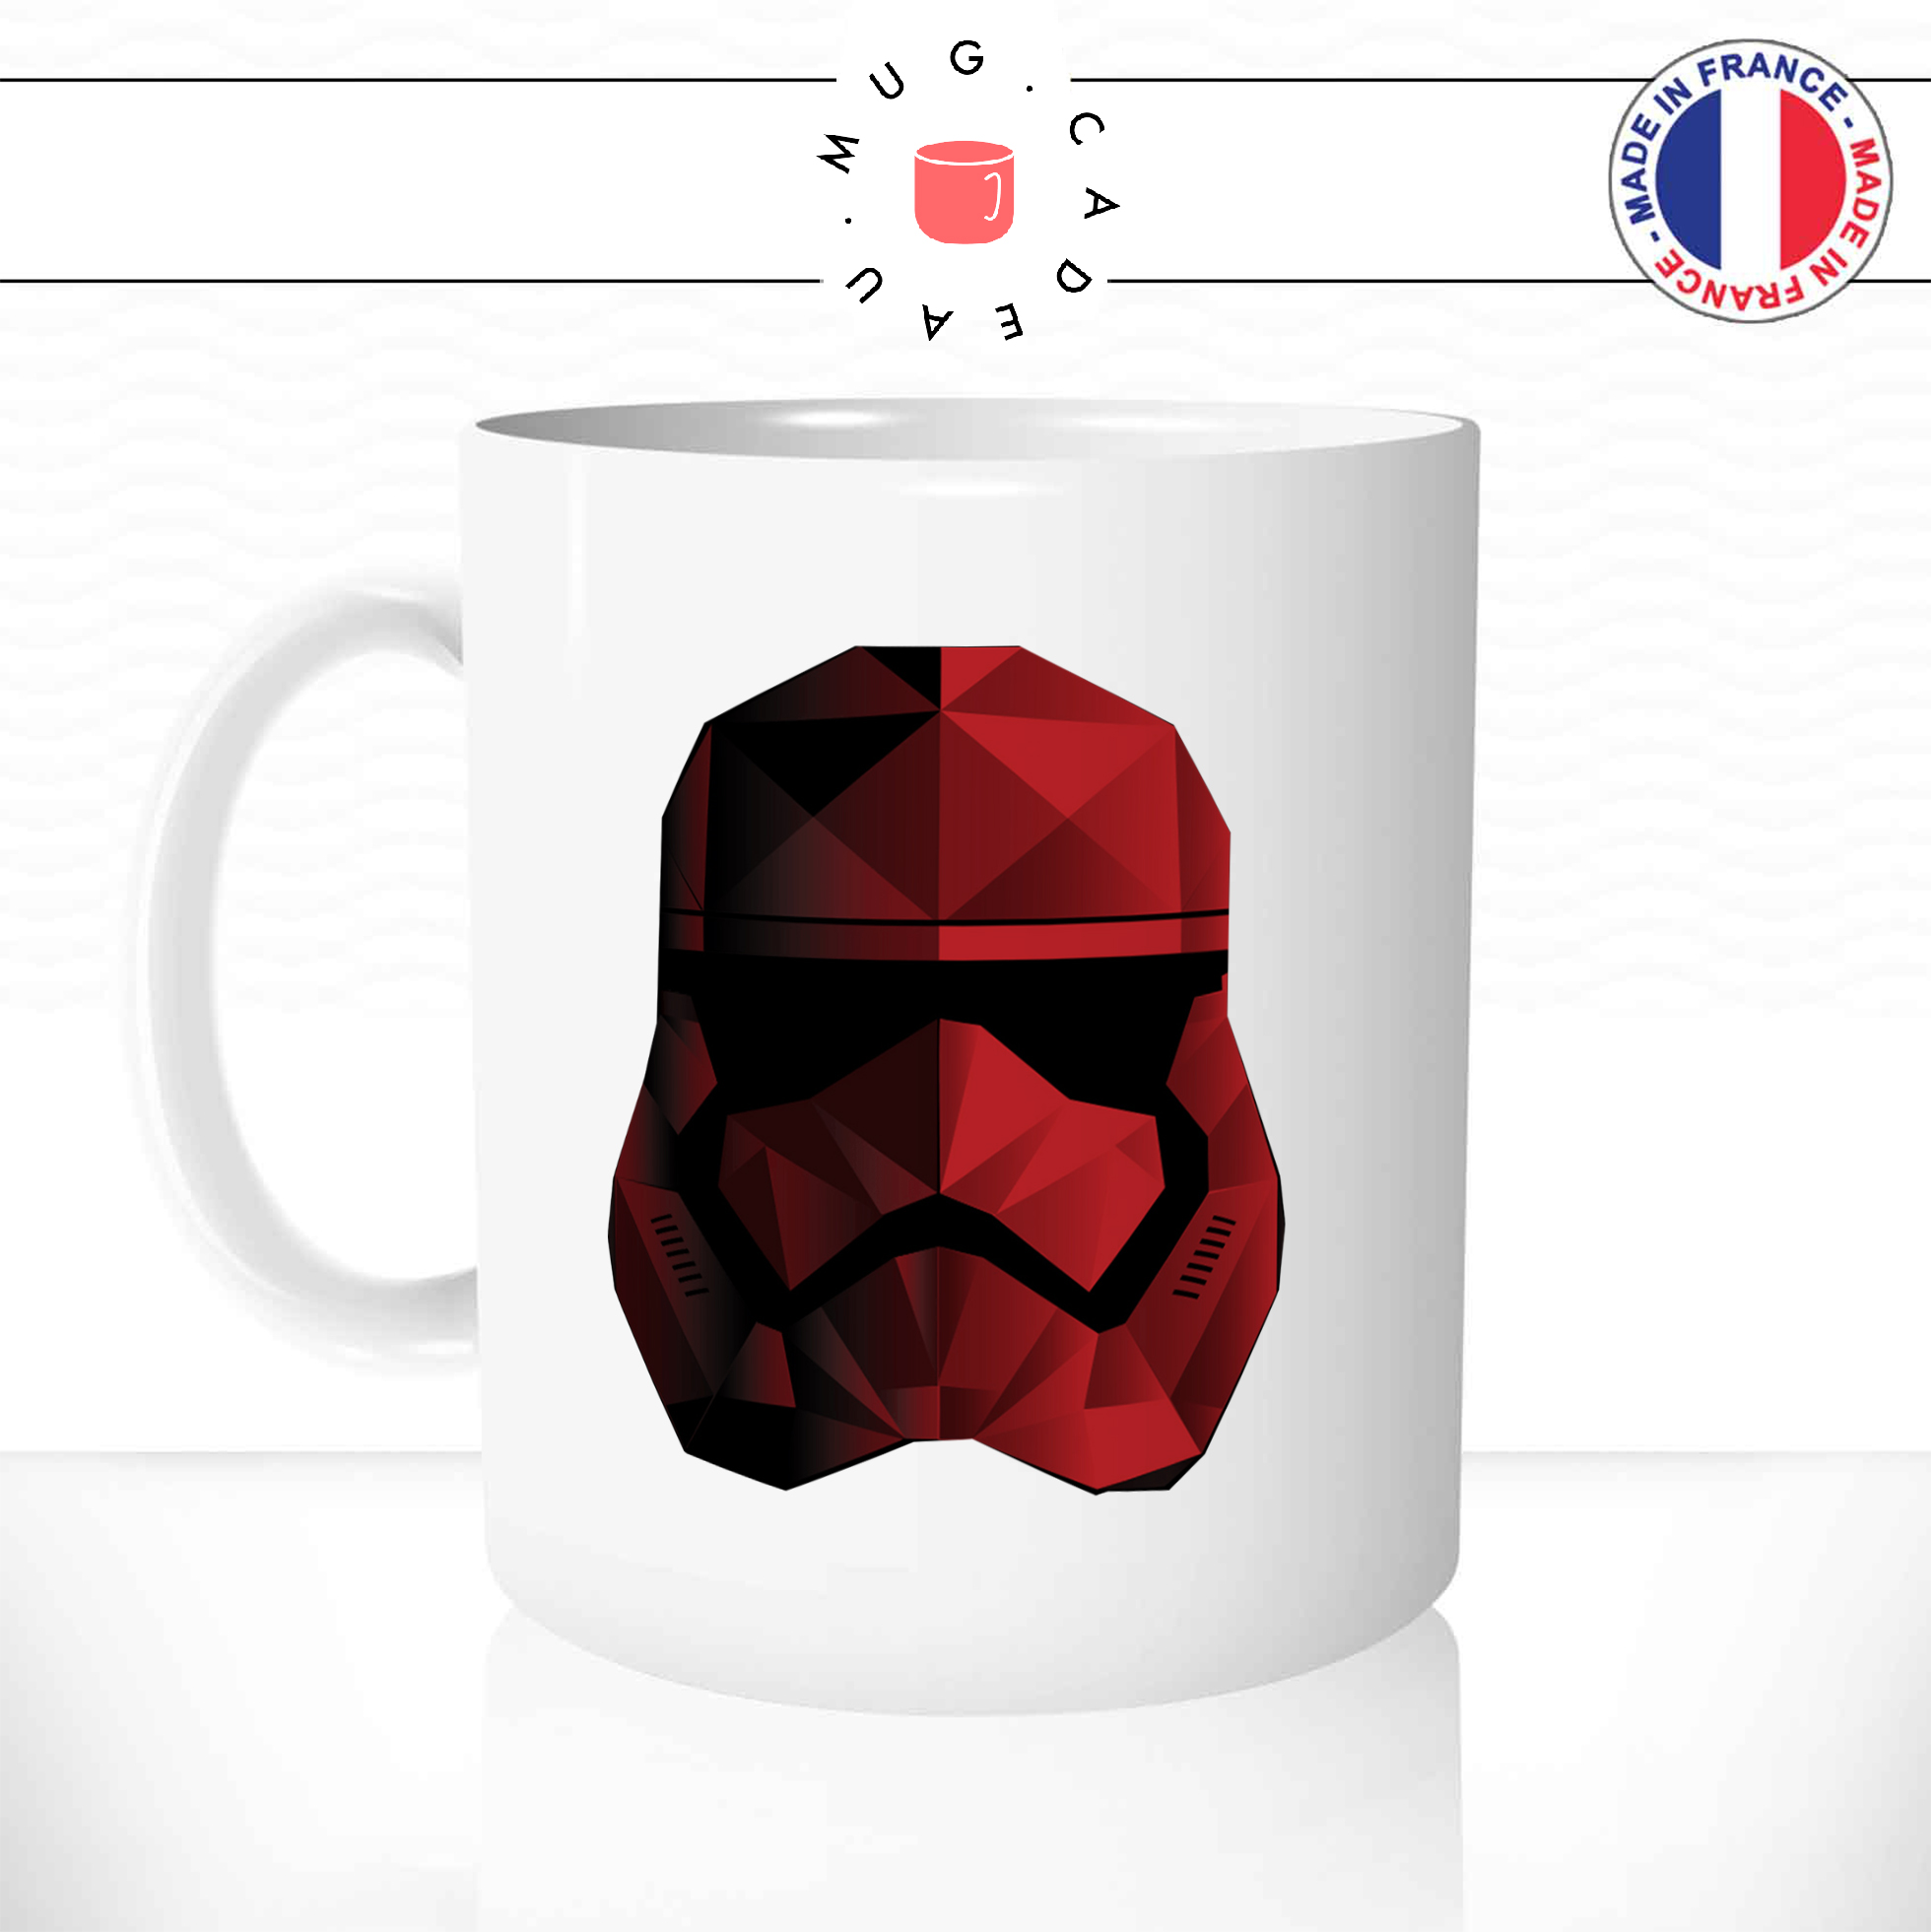 mug-tasse-ref8-starwars-clone-casque-rouge-origami-cafe-the-mugs-tasses-personnalise-anse-gauche